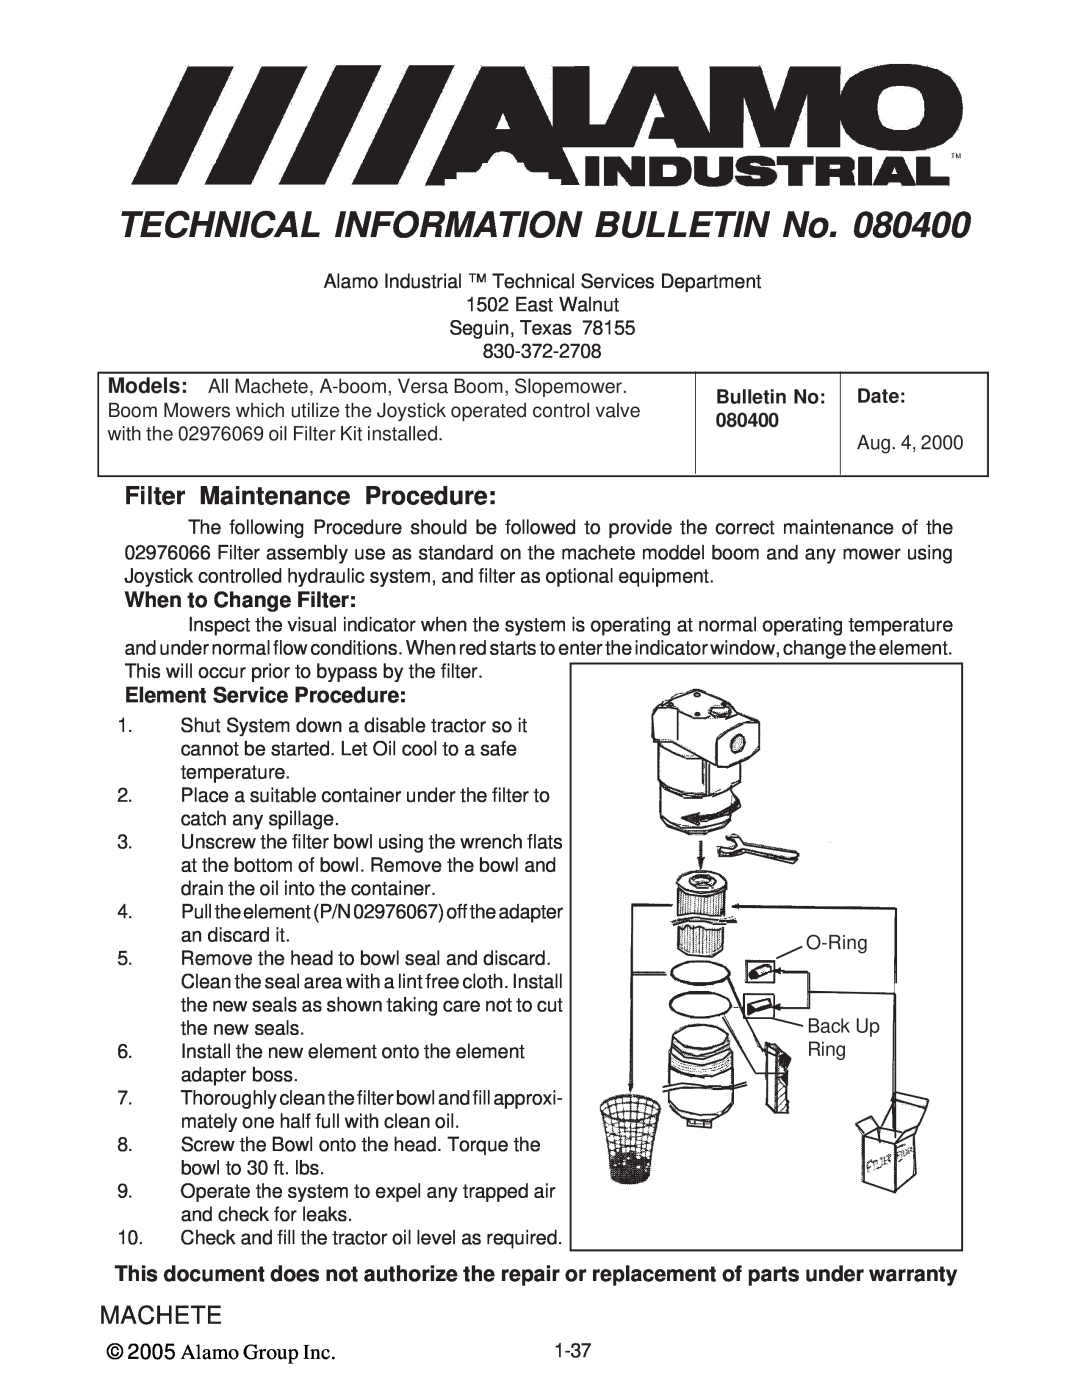 Alamo T 7740 Filter Maintenance Procedure, When to Change Filter, Element Service Procedure, Bulletin No, Machete, Date 